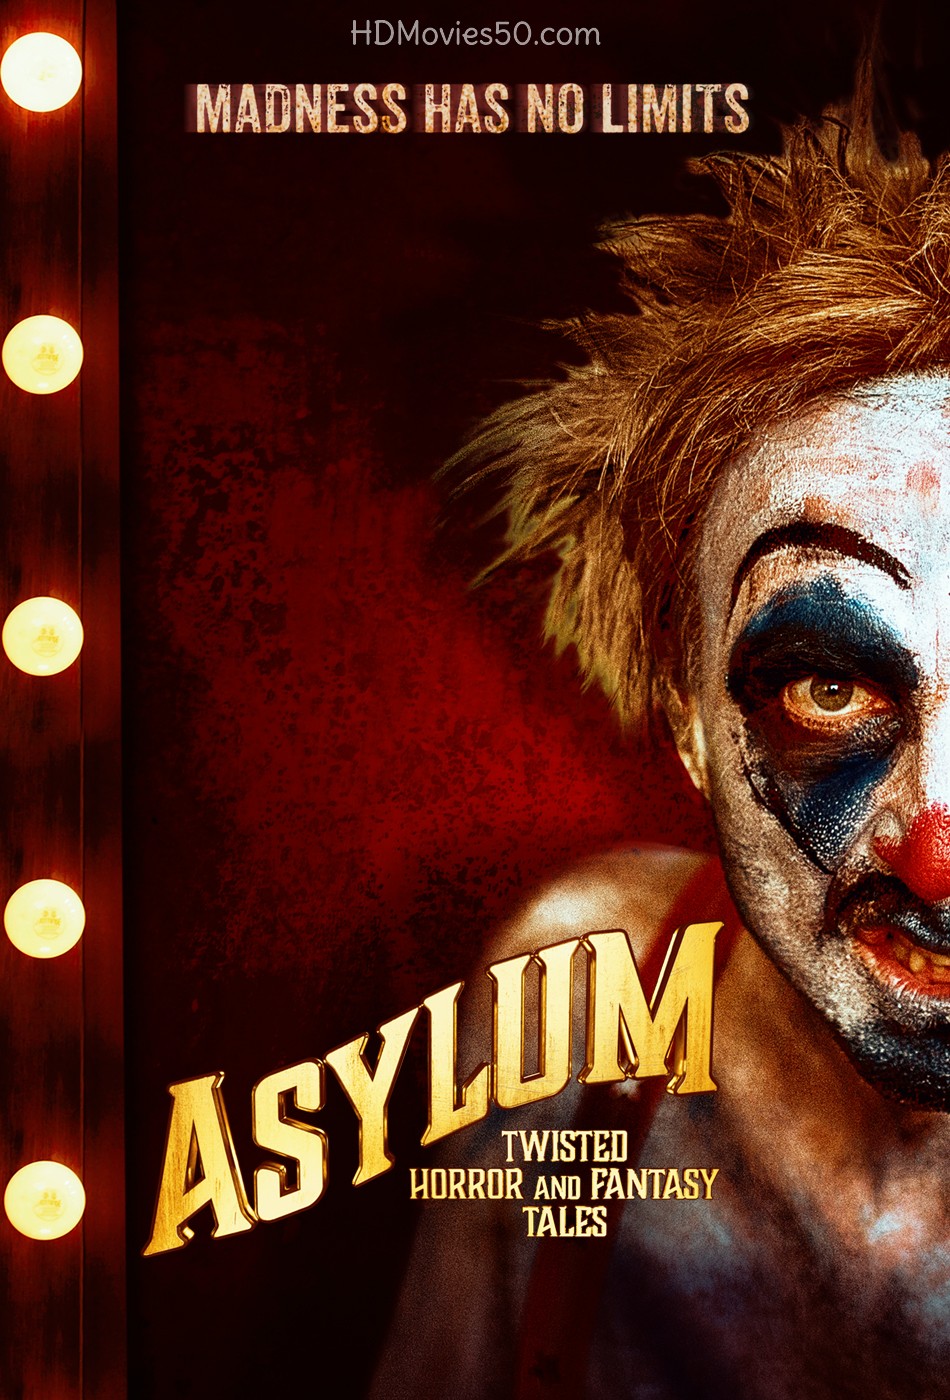 Asylum Twisted Horror And Fantasy Tales (2020) 480p BluRay Hindi ORG Dual Audio Movie ESubs [400MB]